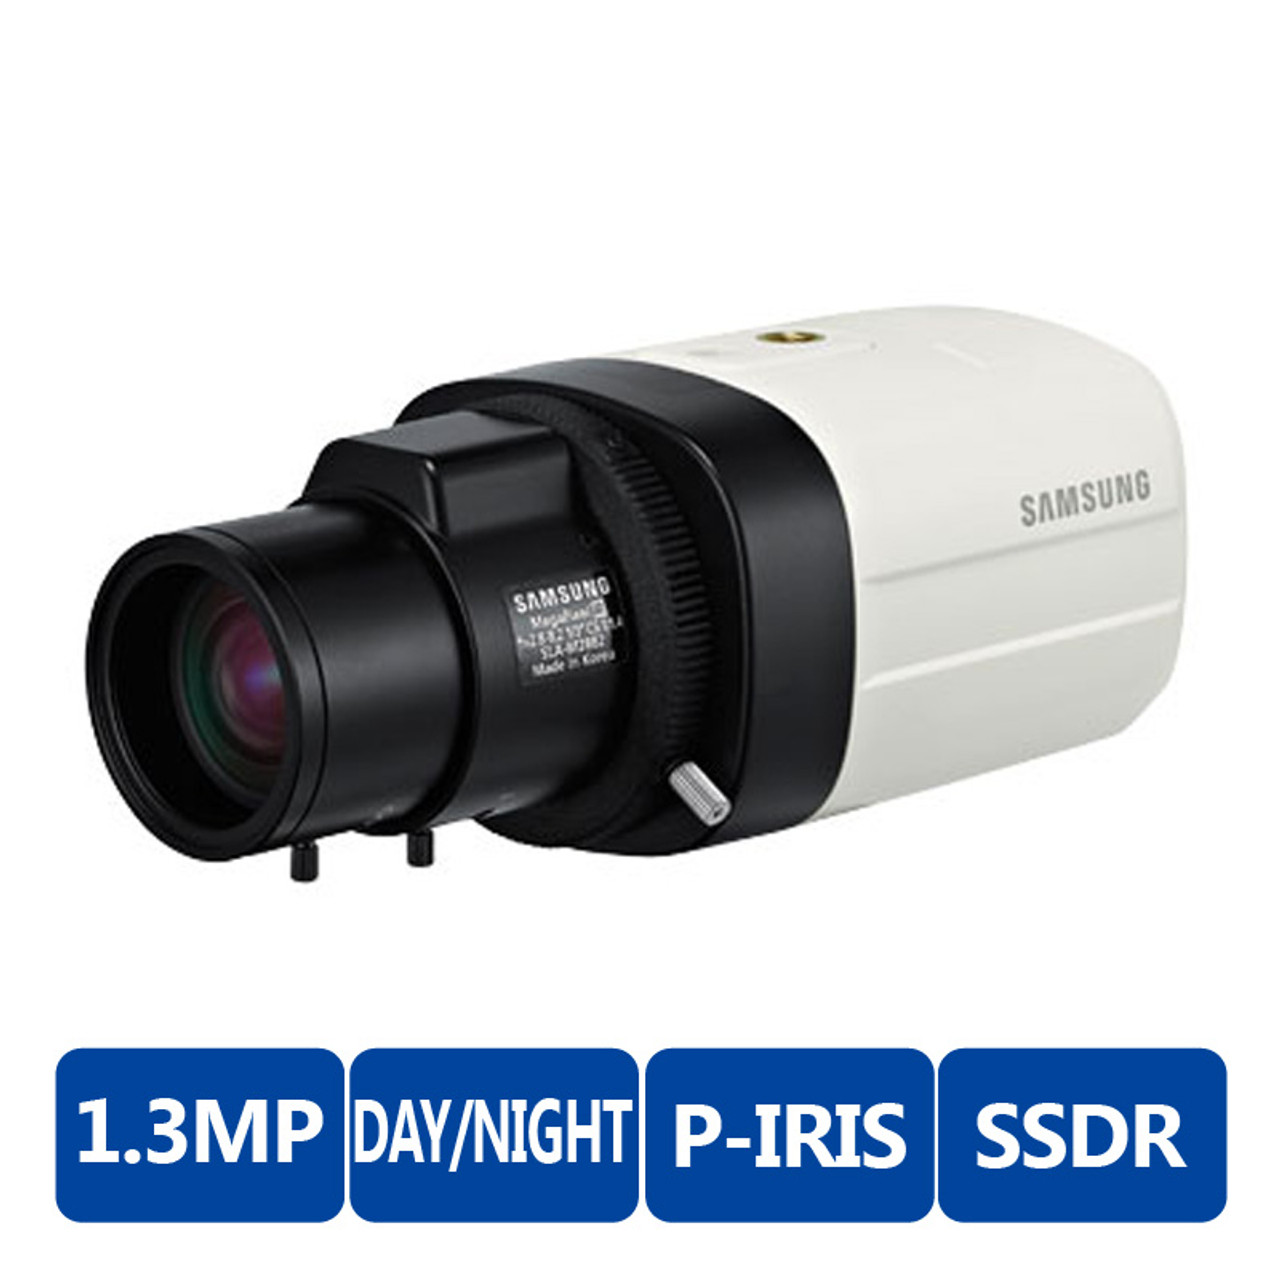 Migratie Conciërge auteur Samsung Hanwha SCB-5005 Indoor Box CCTV Camera